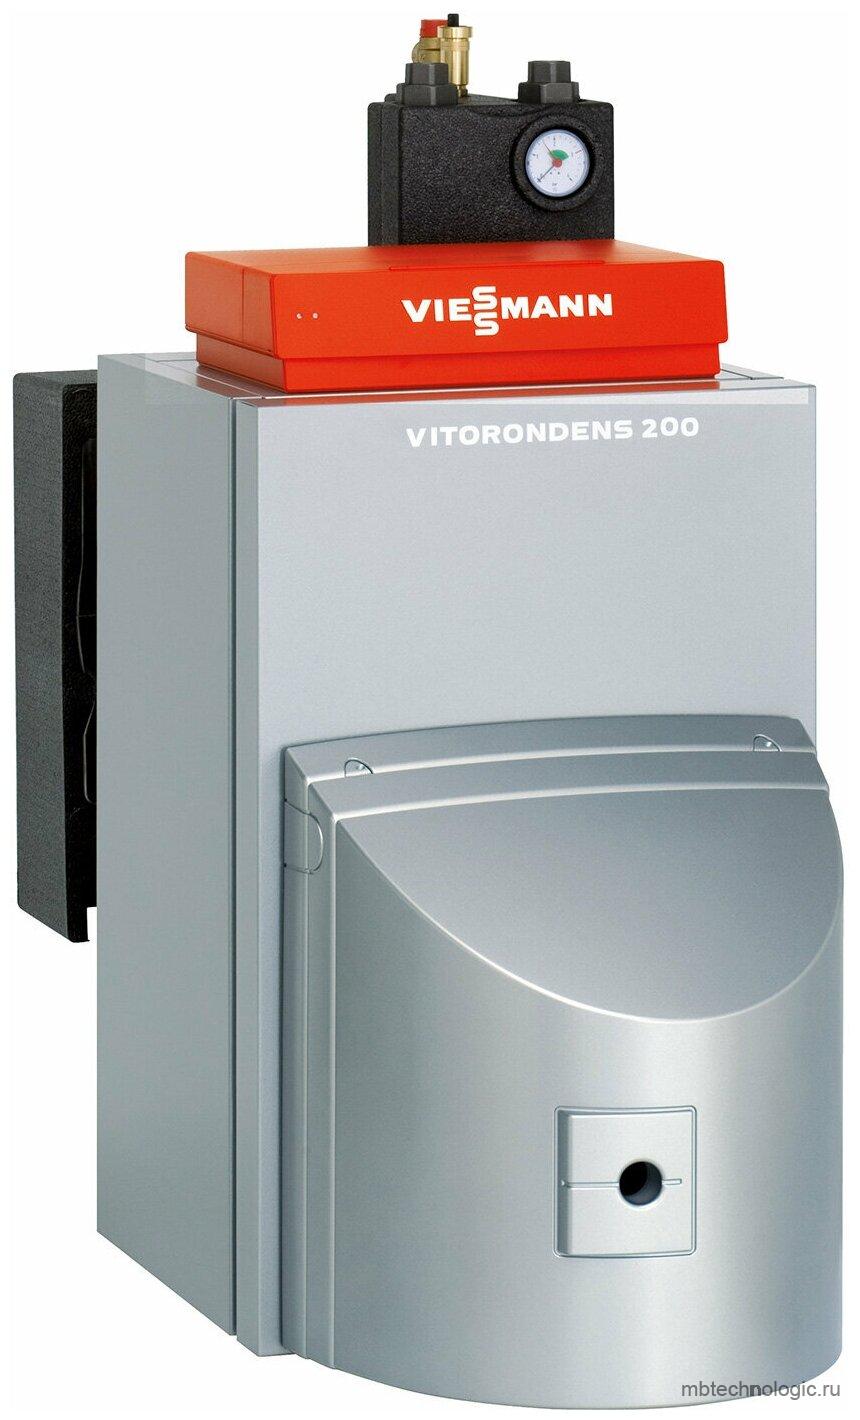 Viessmann Vitorondens 200-T BR2A027